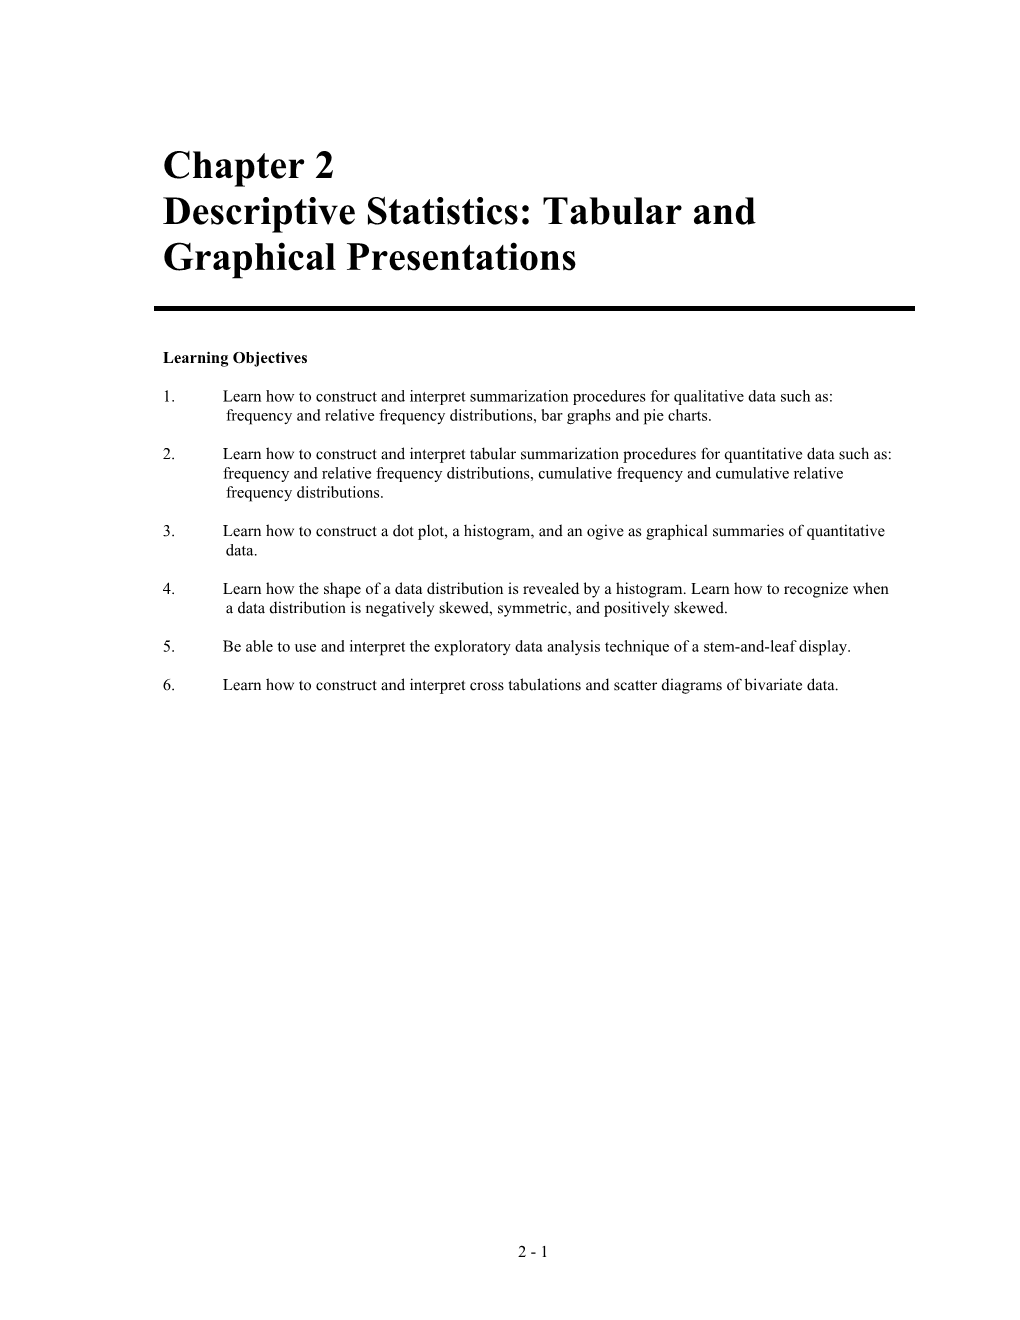 Descriptive Statistics: Tabular and Graphical Presentations